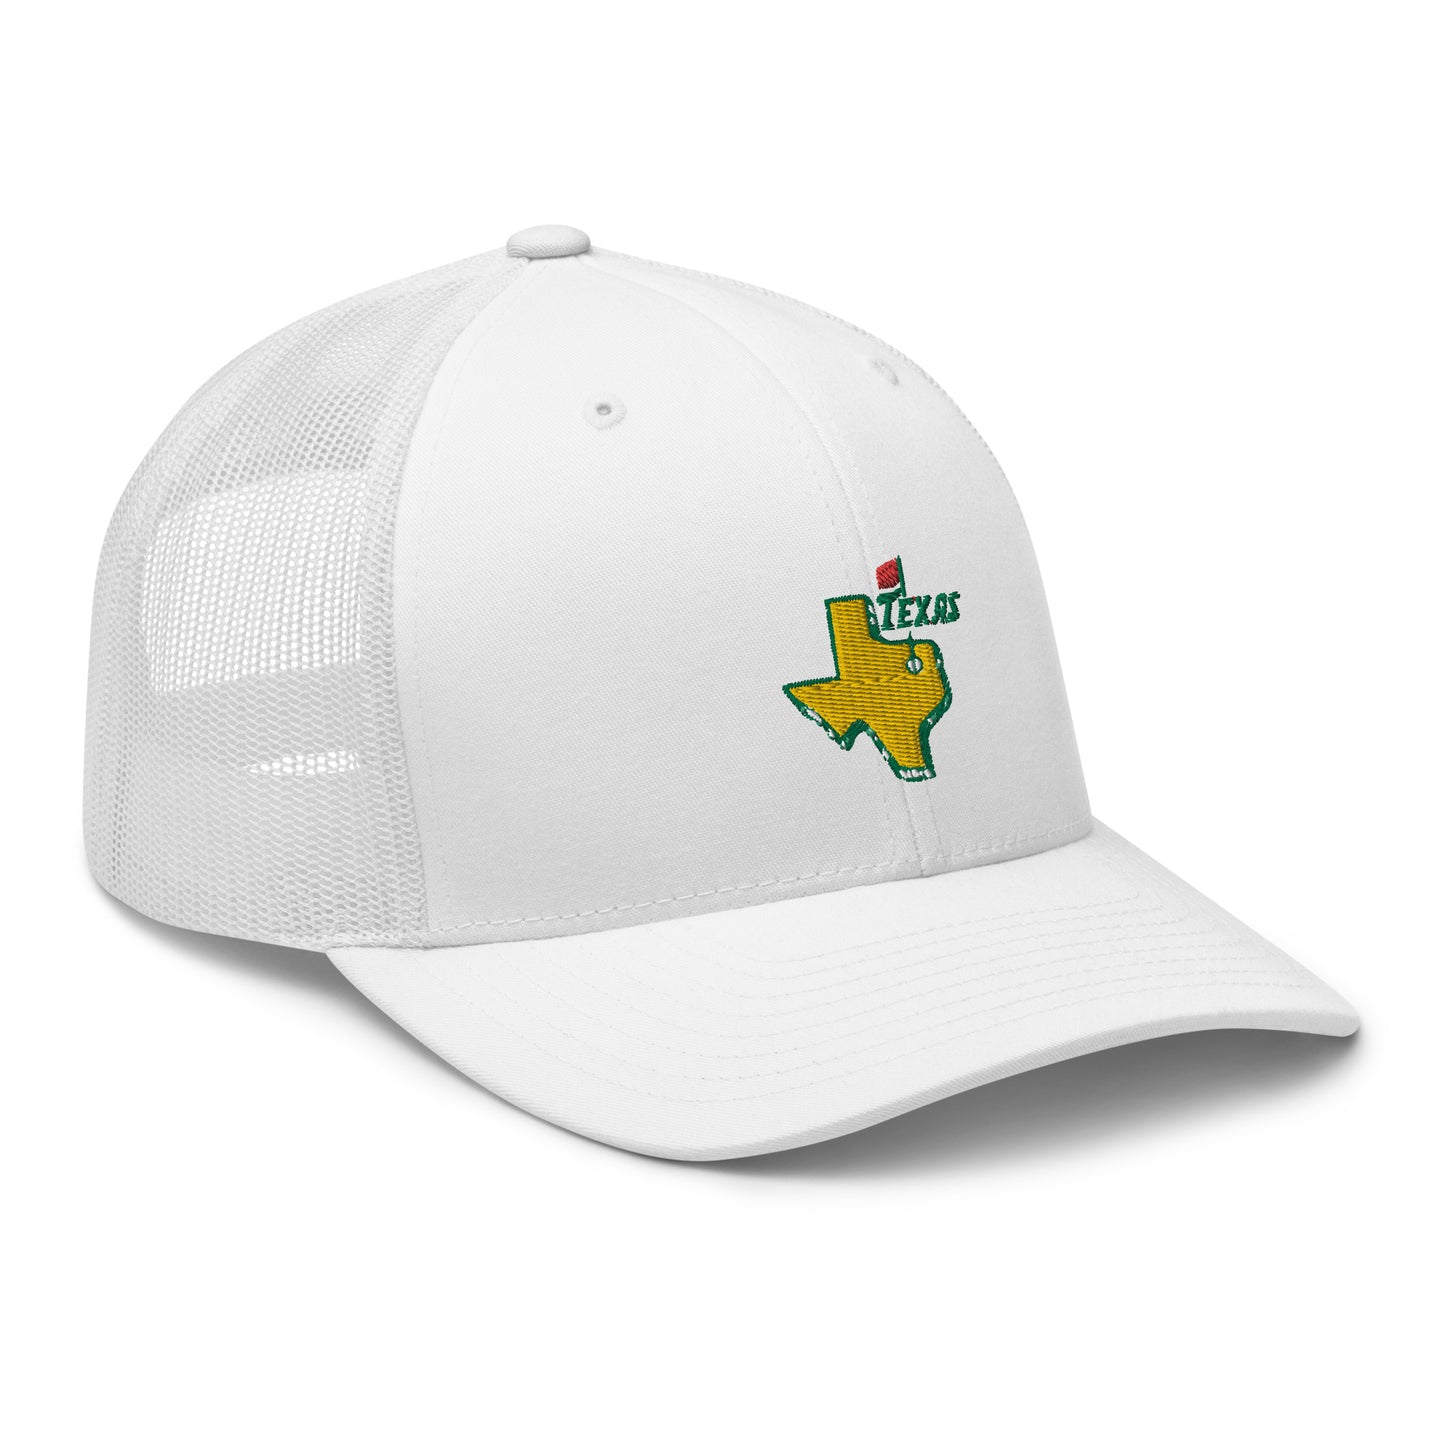 The April Texas Golf Trucker Hat